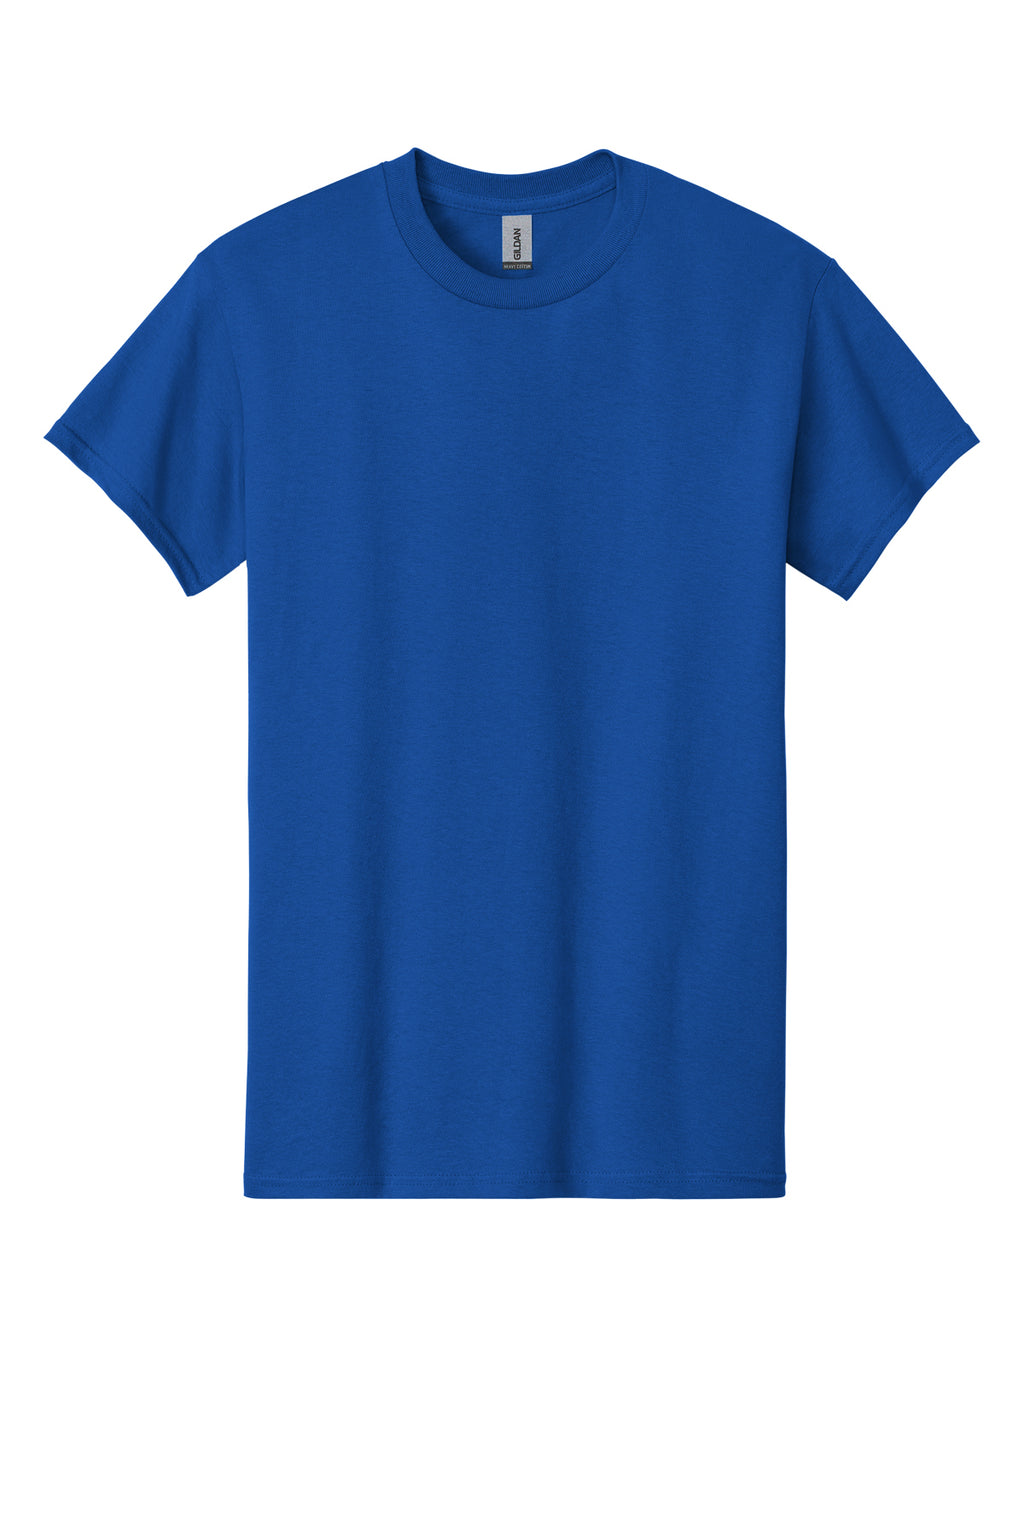 Gildan Mens/Unisex S/S Shirts Royal Blue